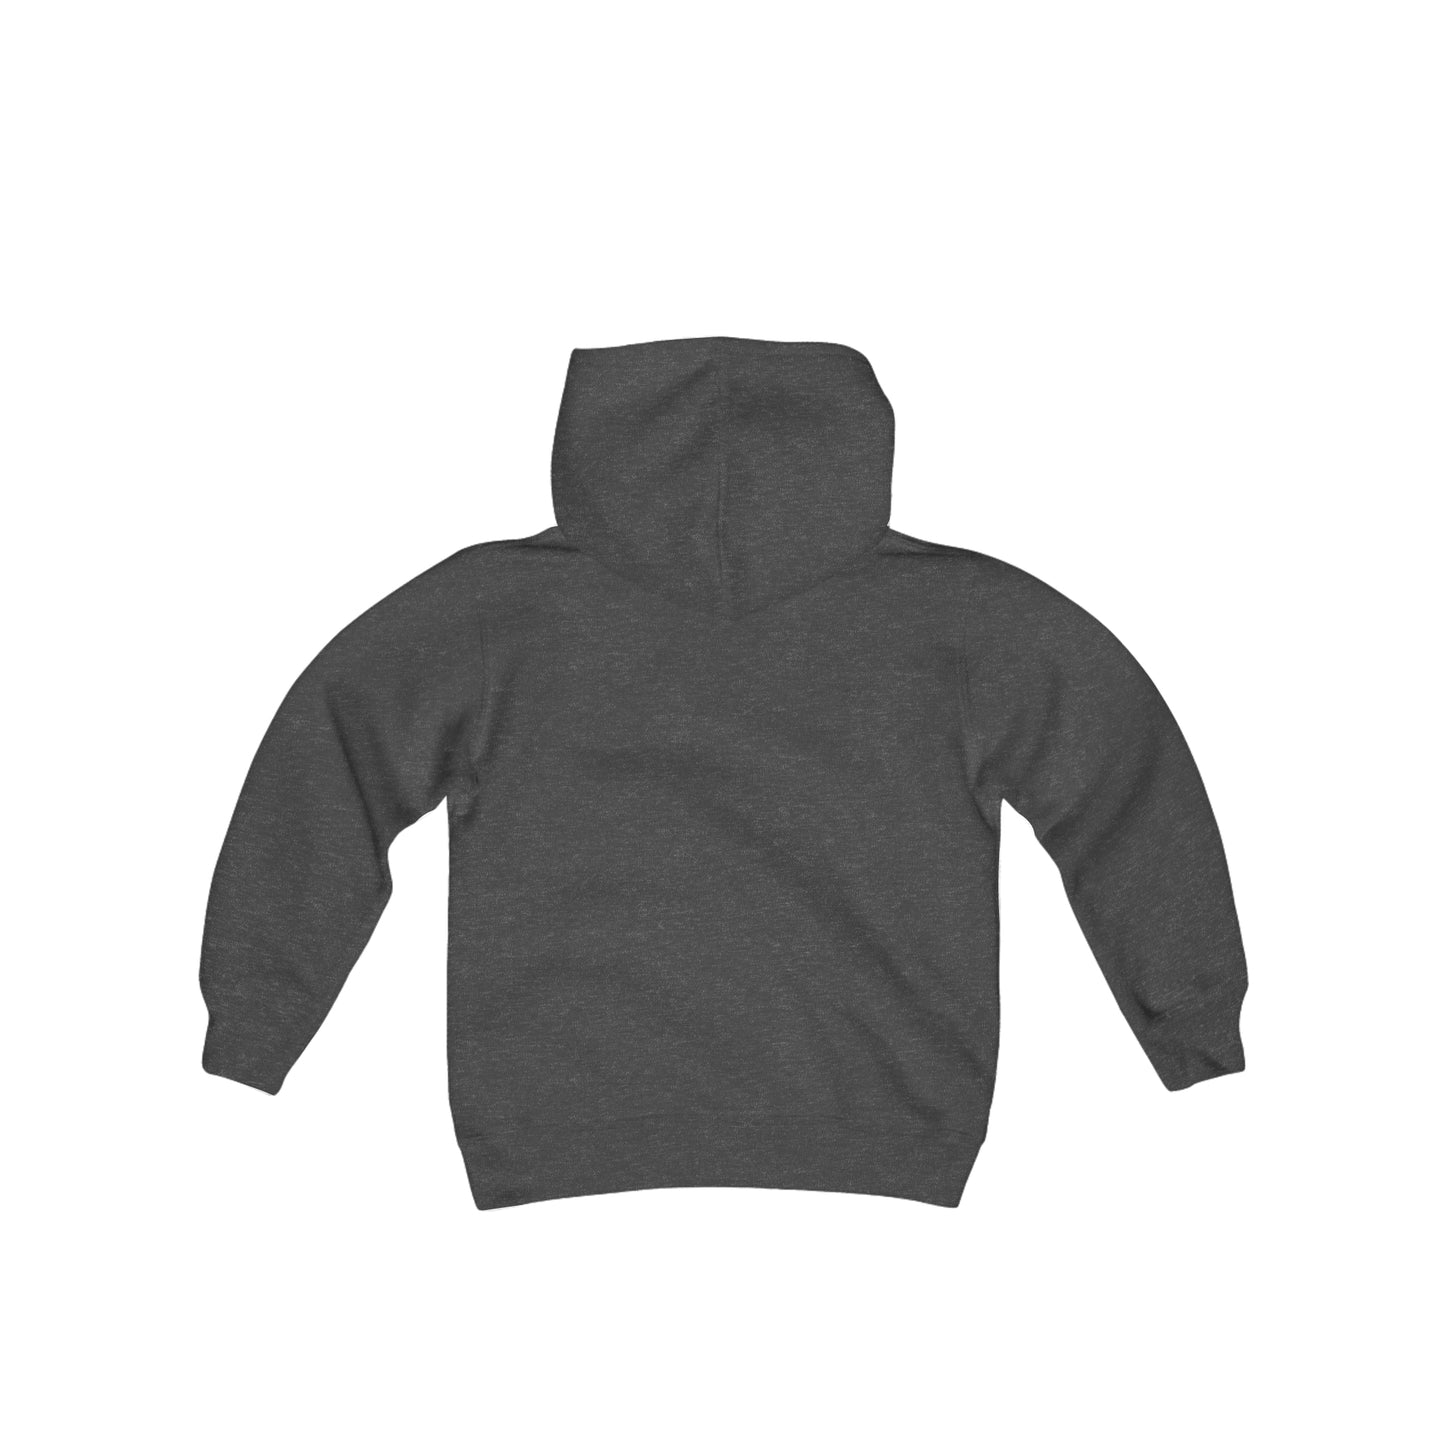 Cloudman  - Boys - Heavy Blend Hooded Sweatshirt  -  Front design